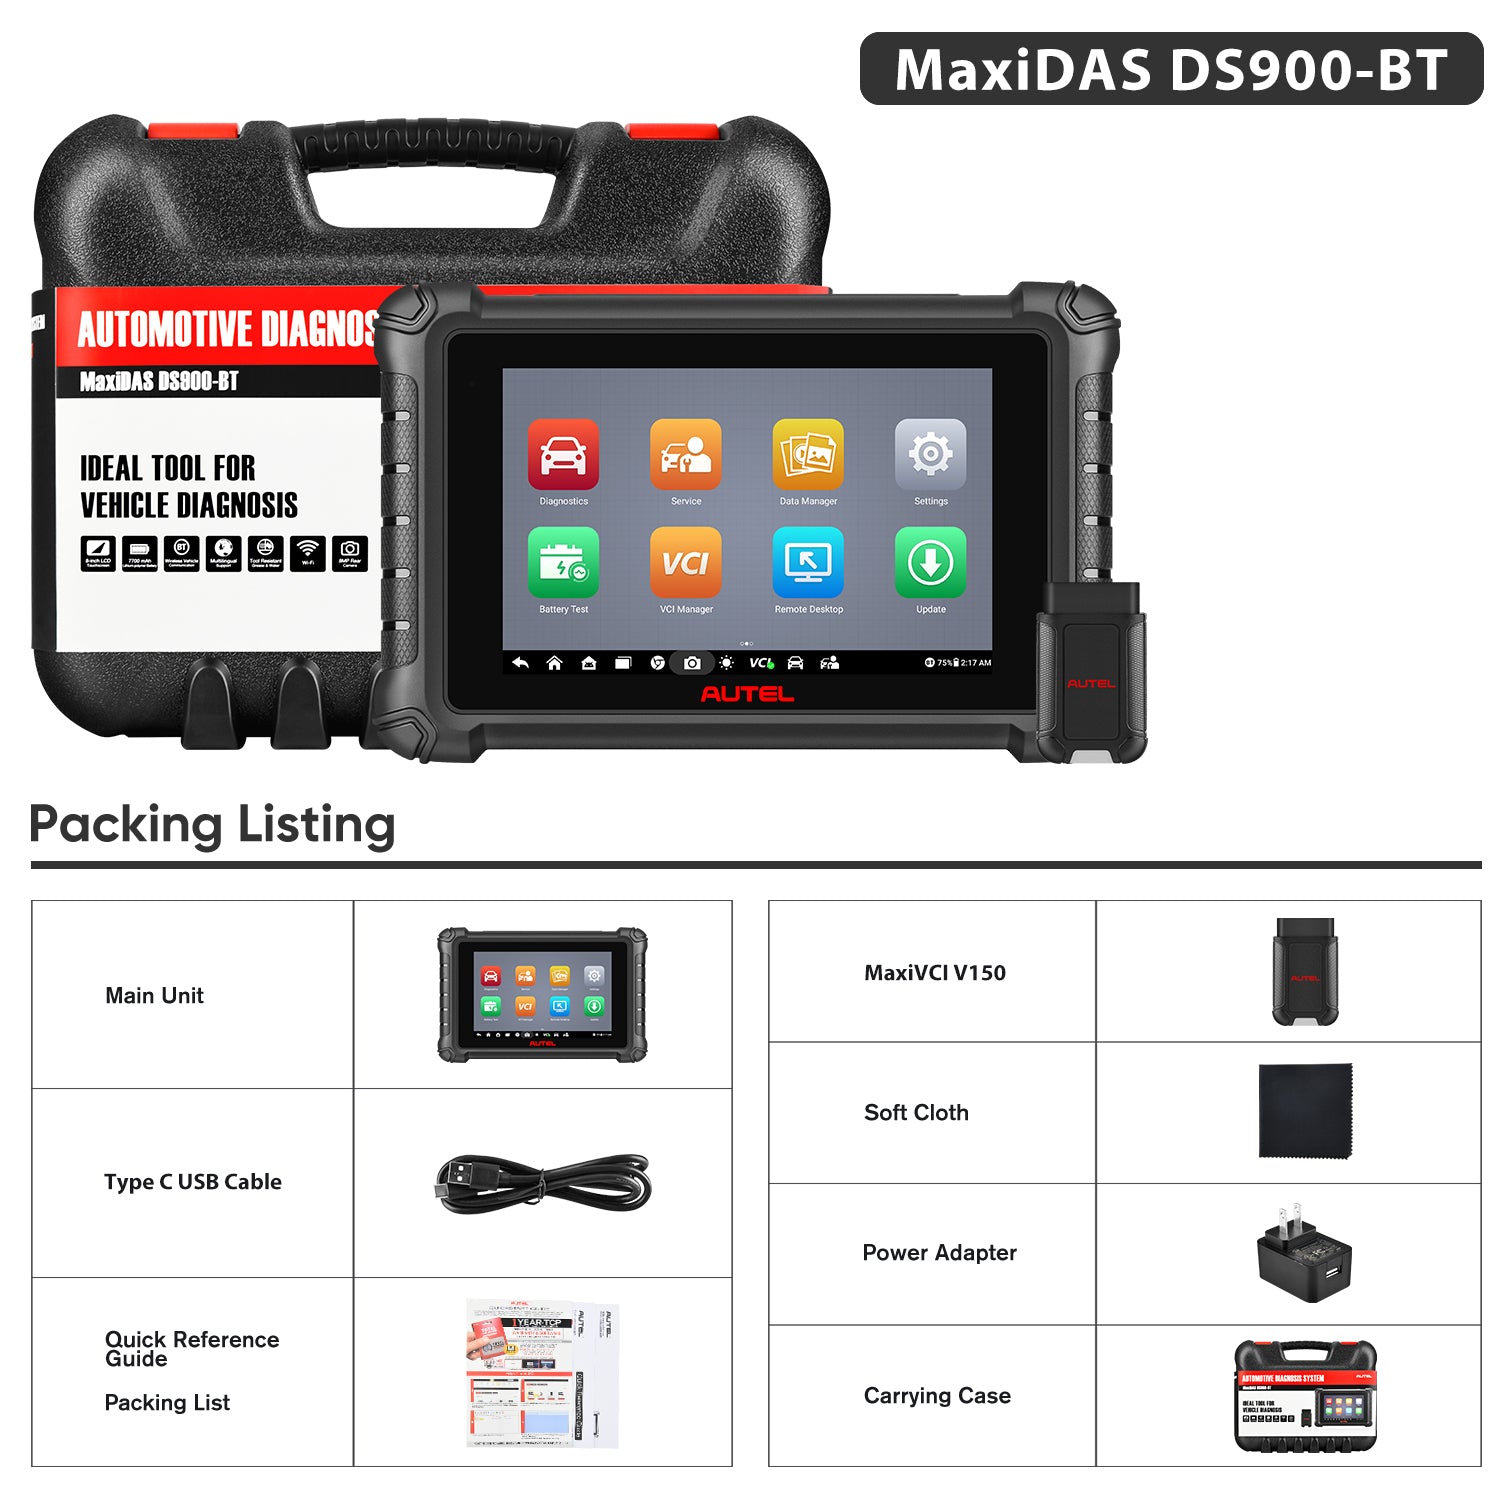 Autel MaxiDAS DS900-BT package list